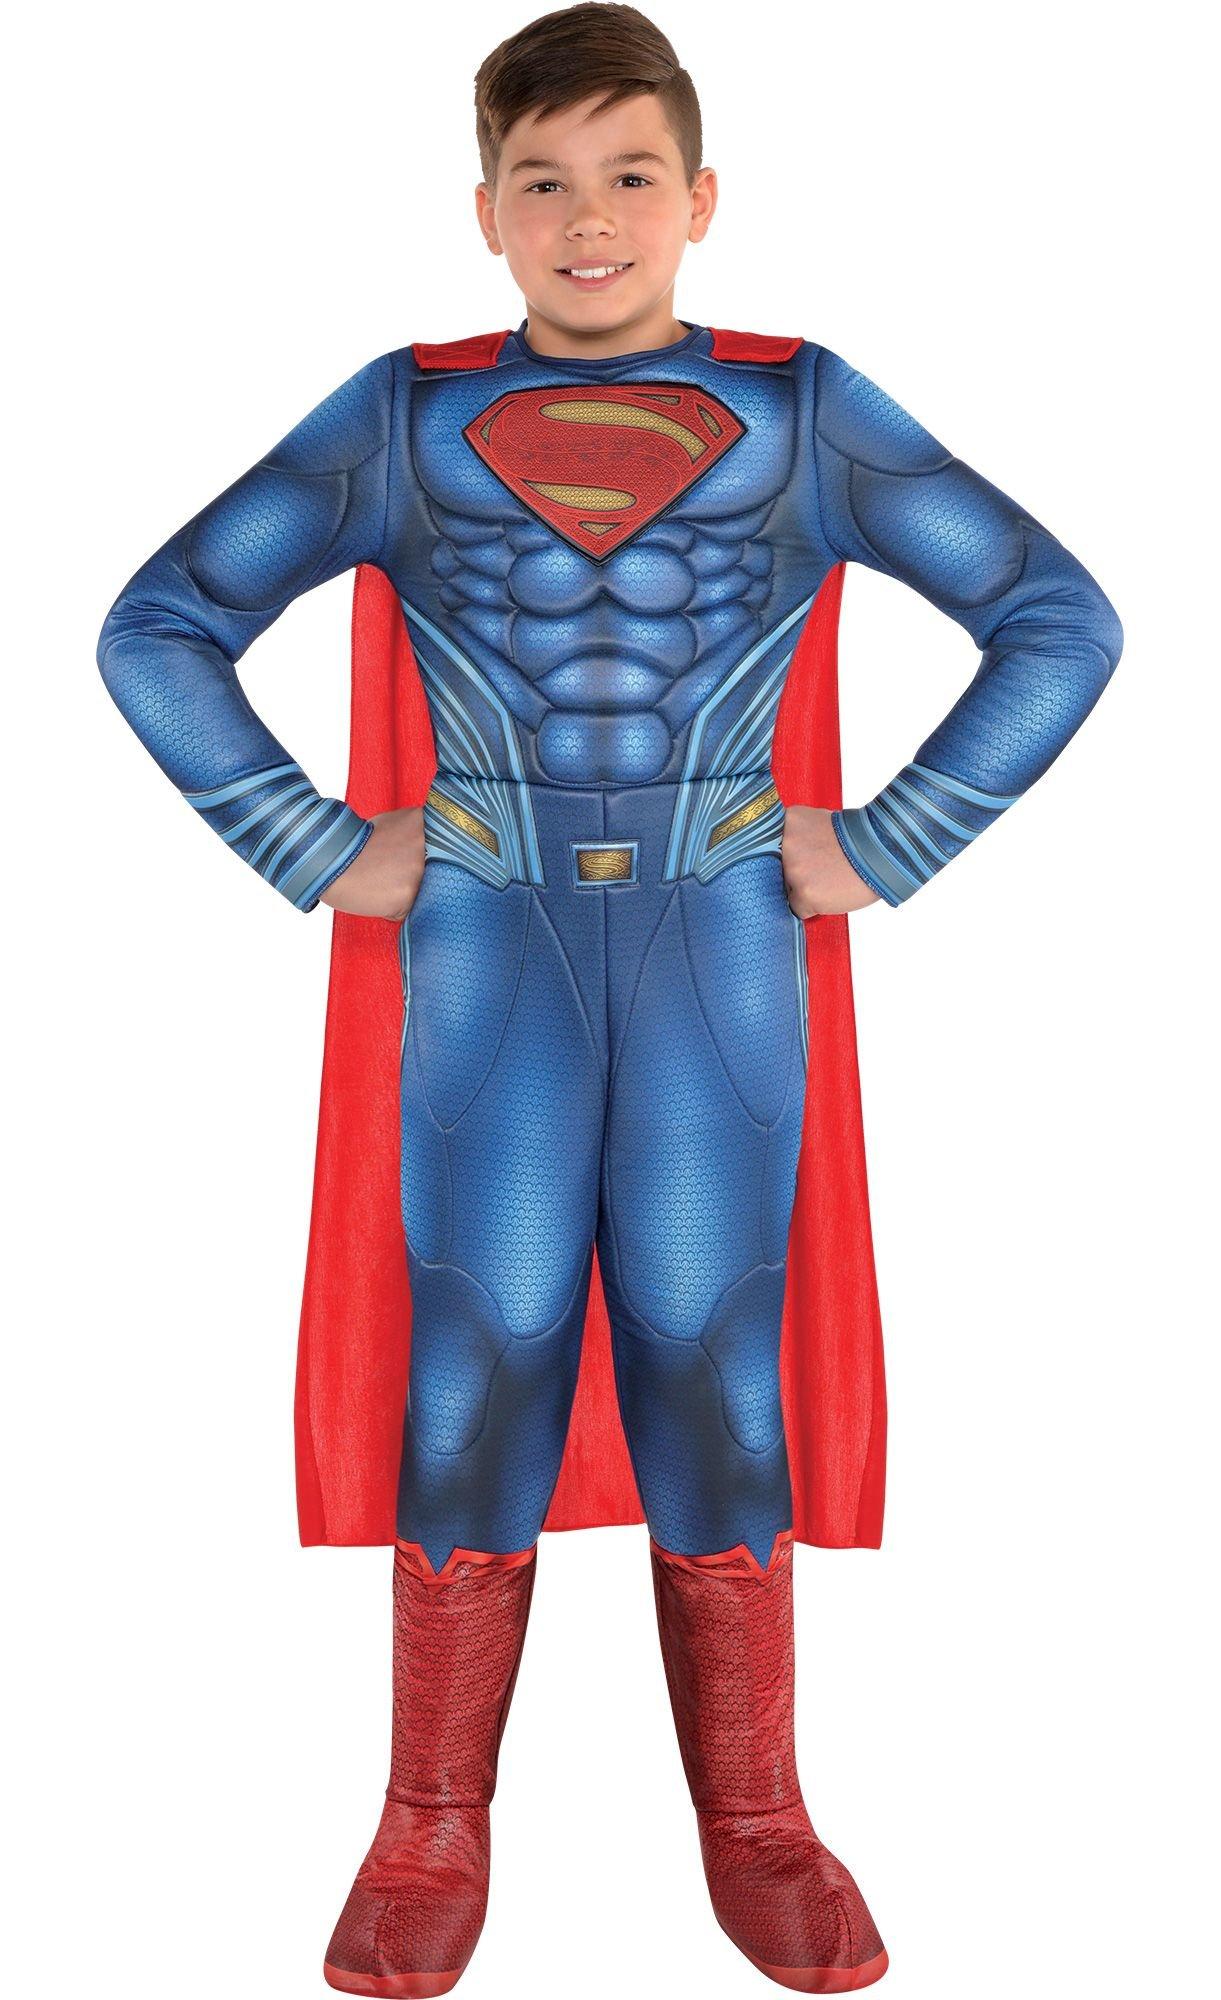  Superman Returns Child's Costume : Toys & Games